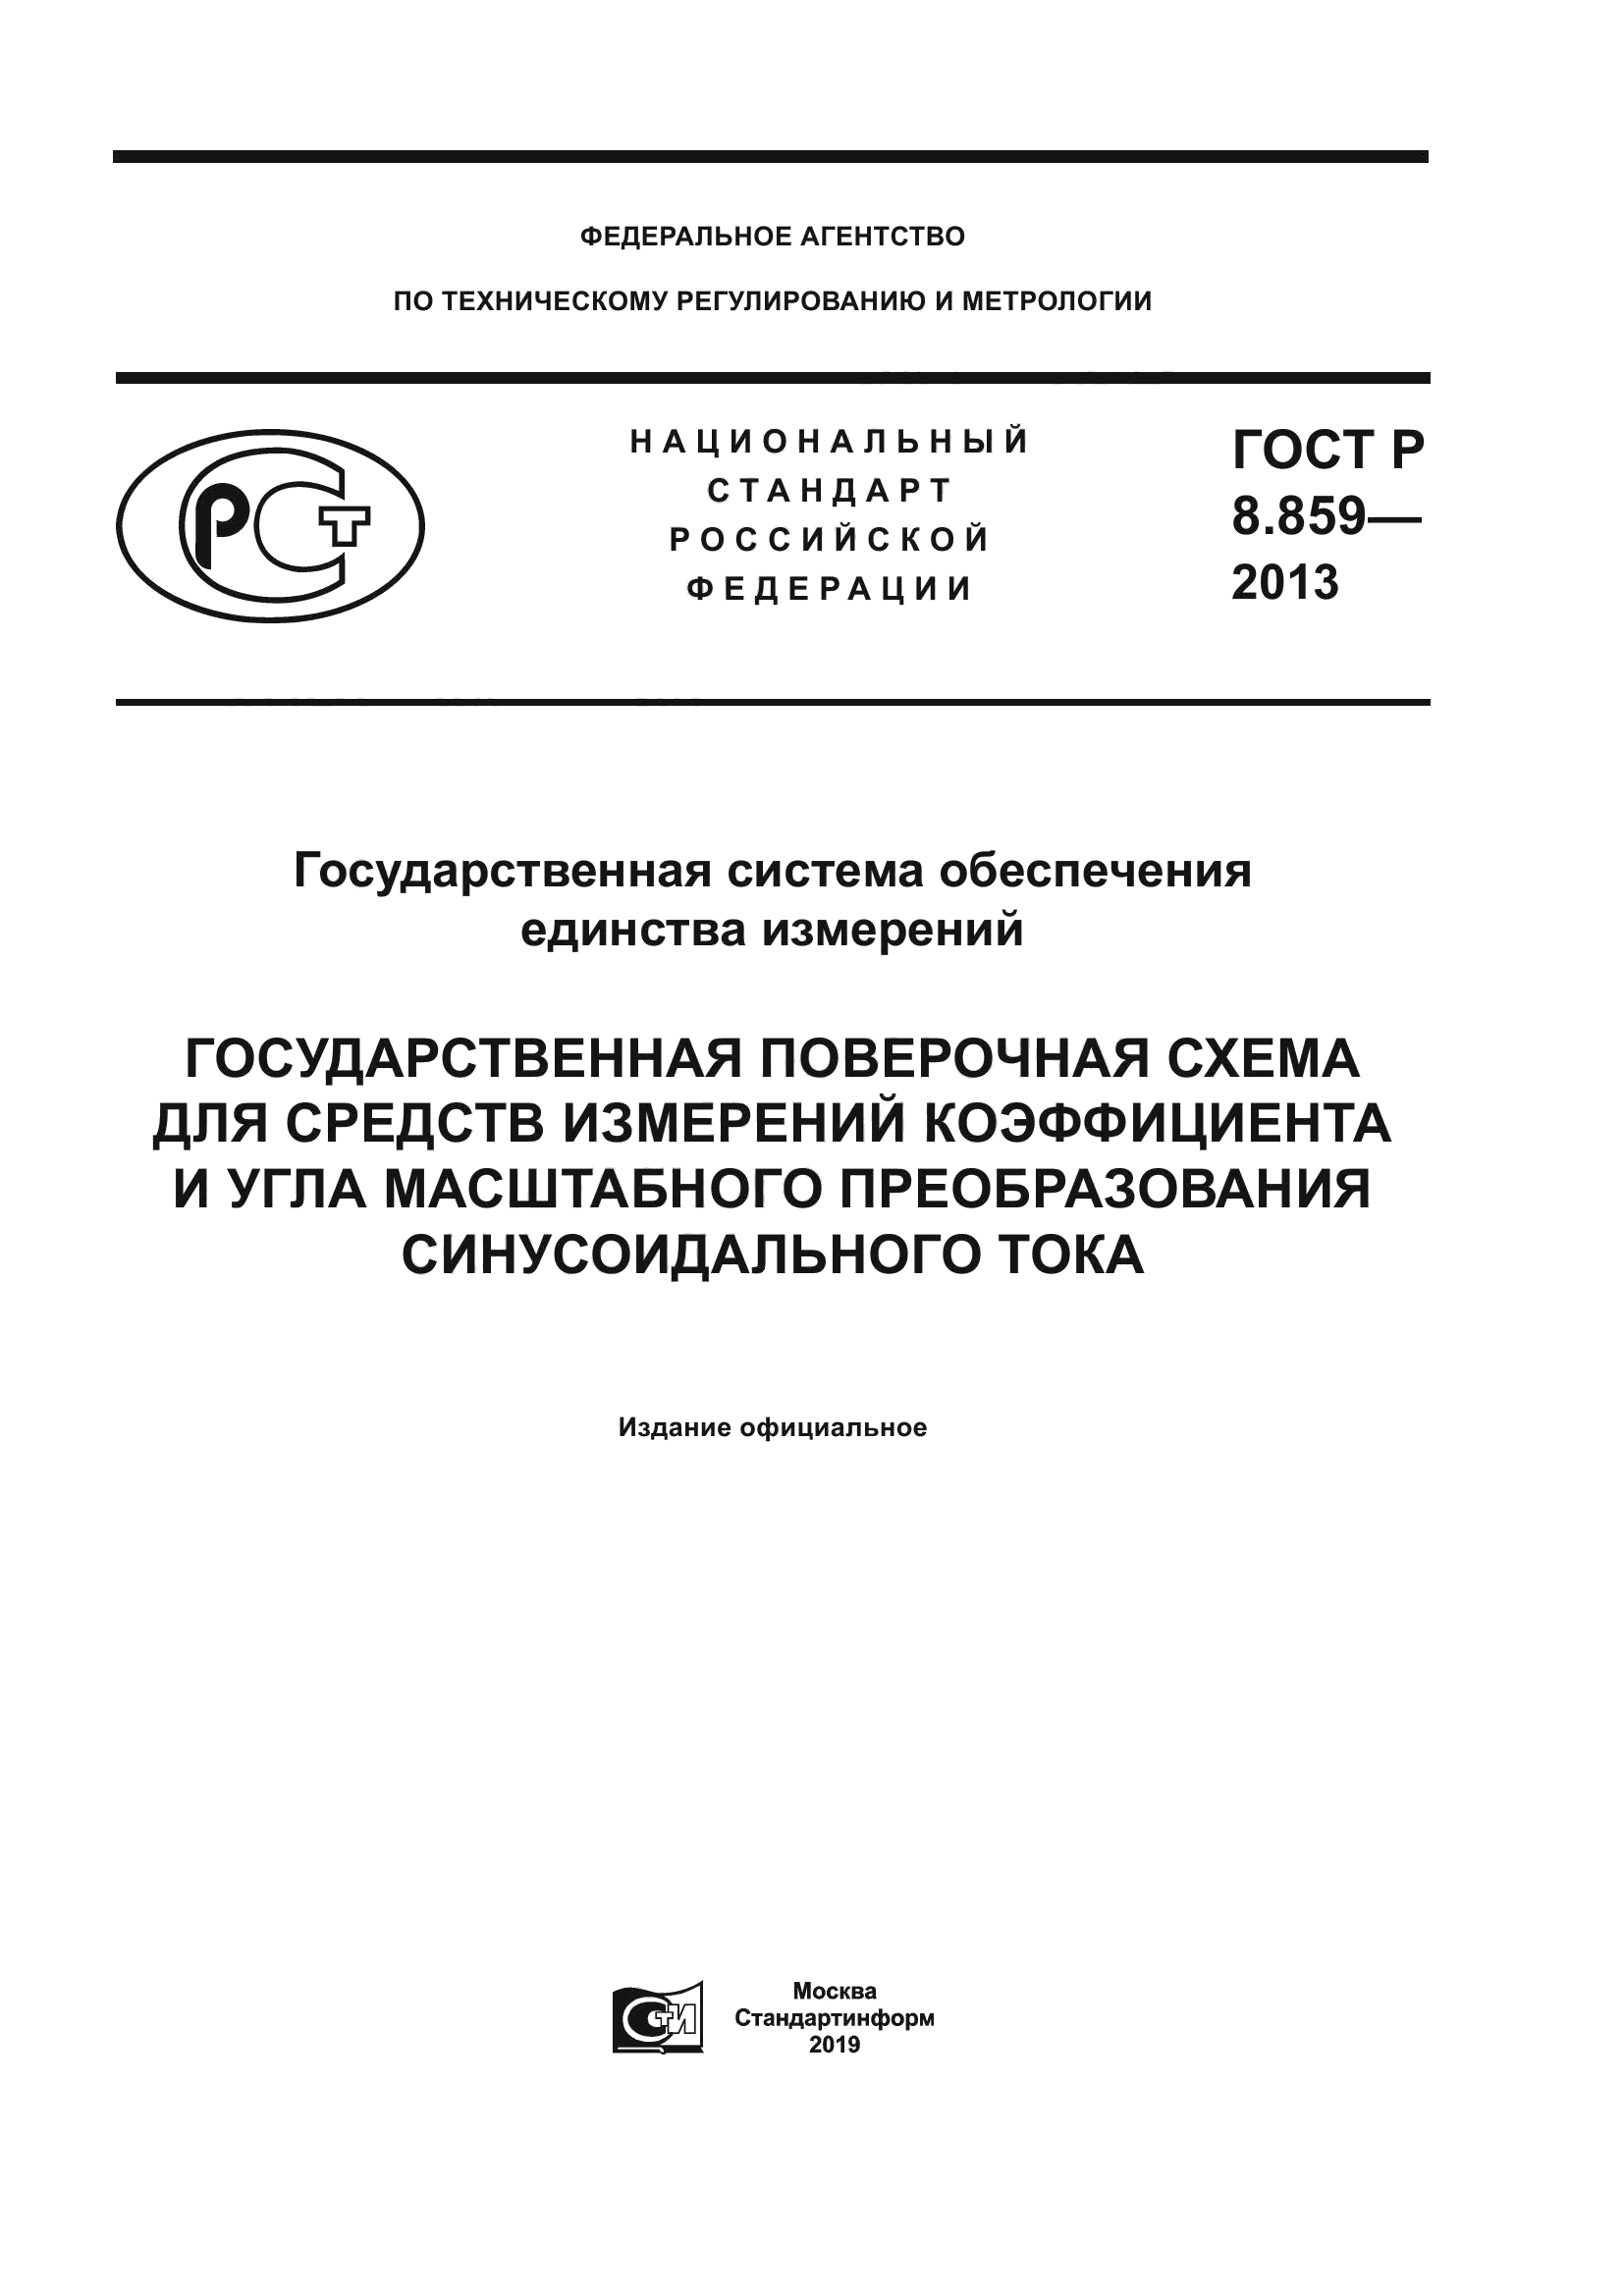 ГОСТ Р 8.859-2013